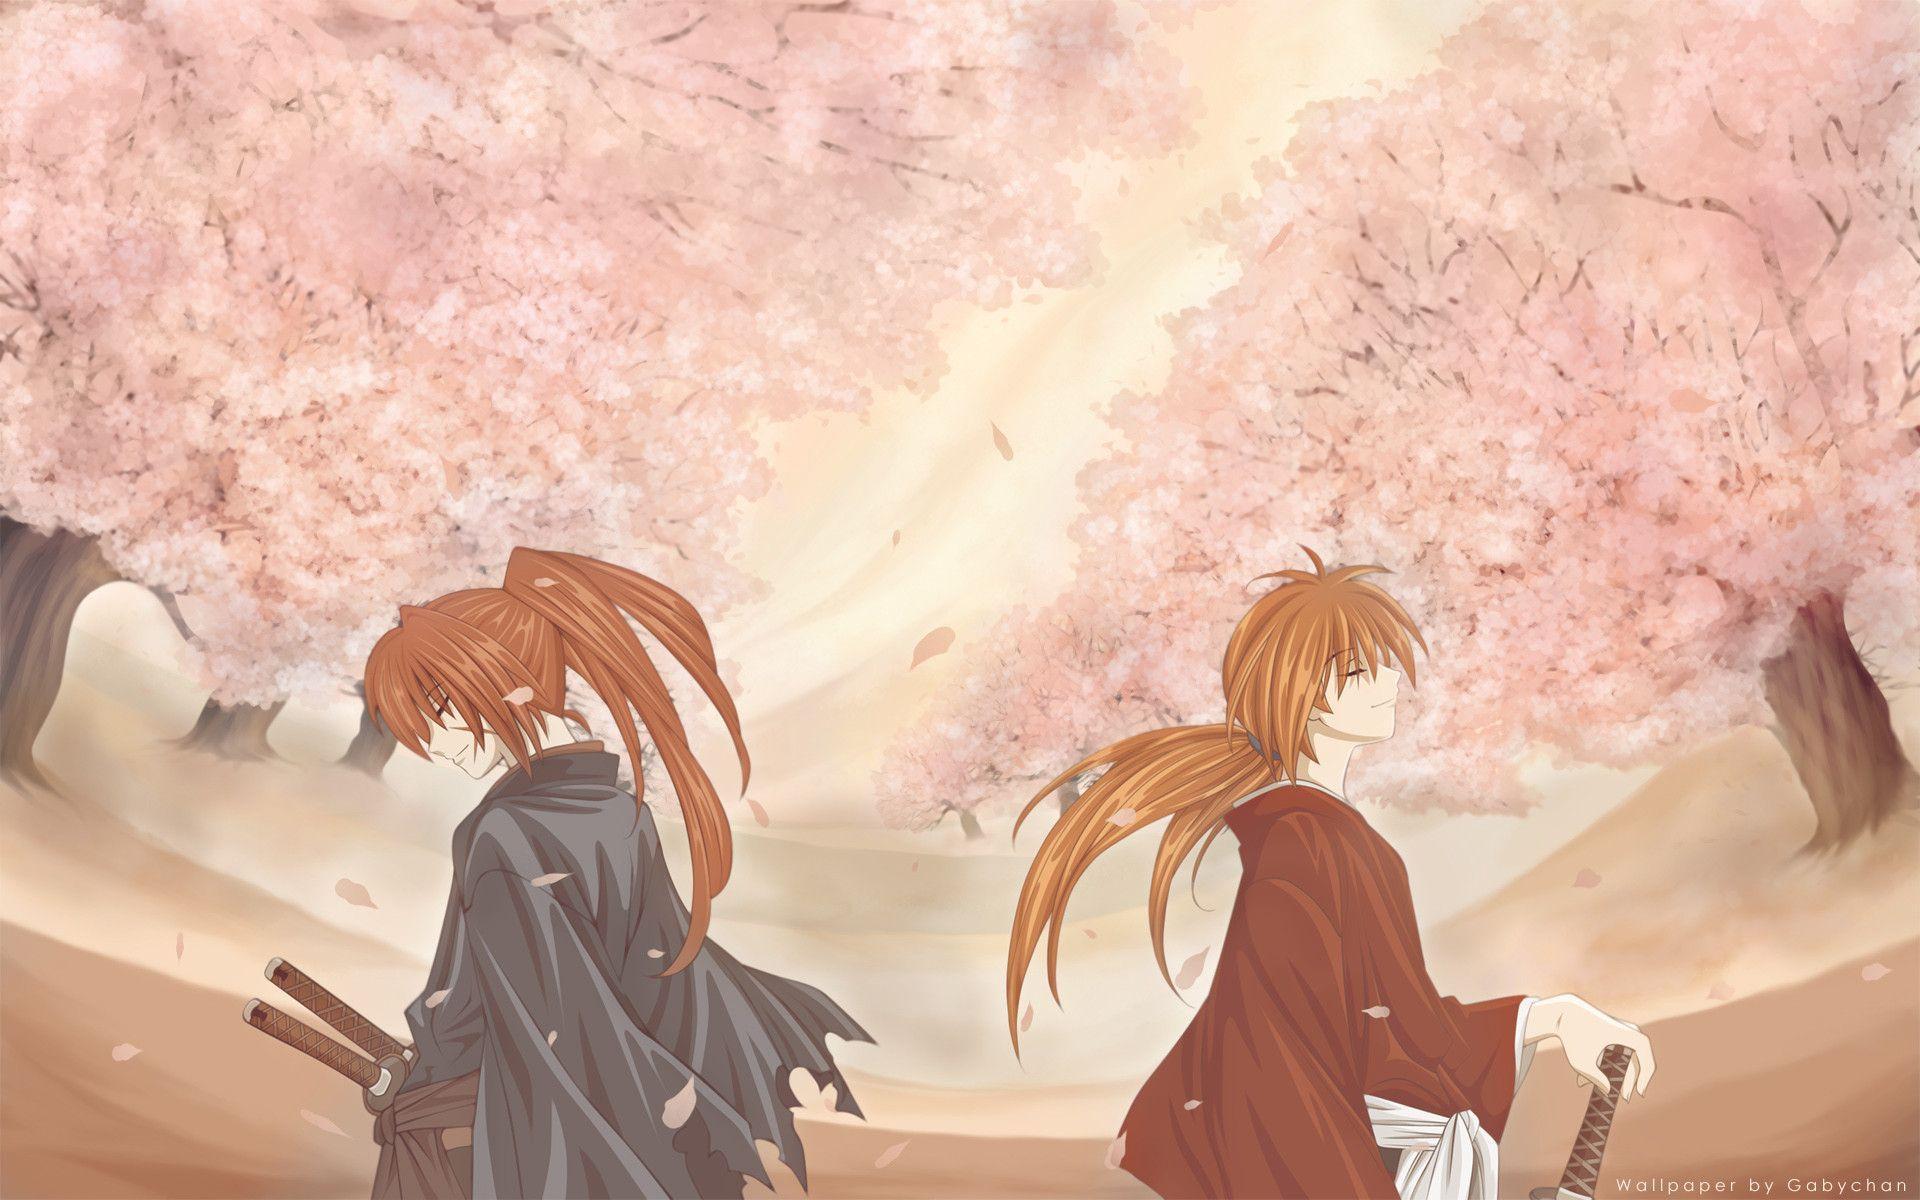 Rurouni Kenshin Wallpaper. Rurouni Kenshin Wallpaper, Rurouni Kenshin Manga Wallpaper and Rurouni Kenshin Wallpaper Mobile